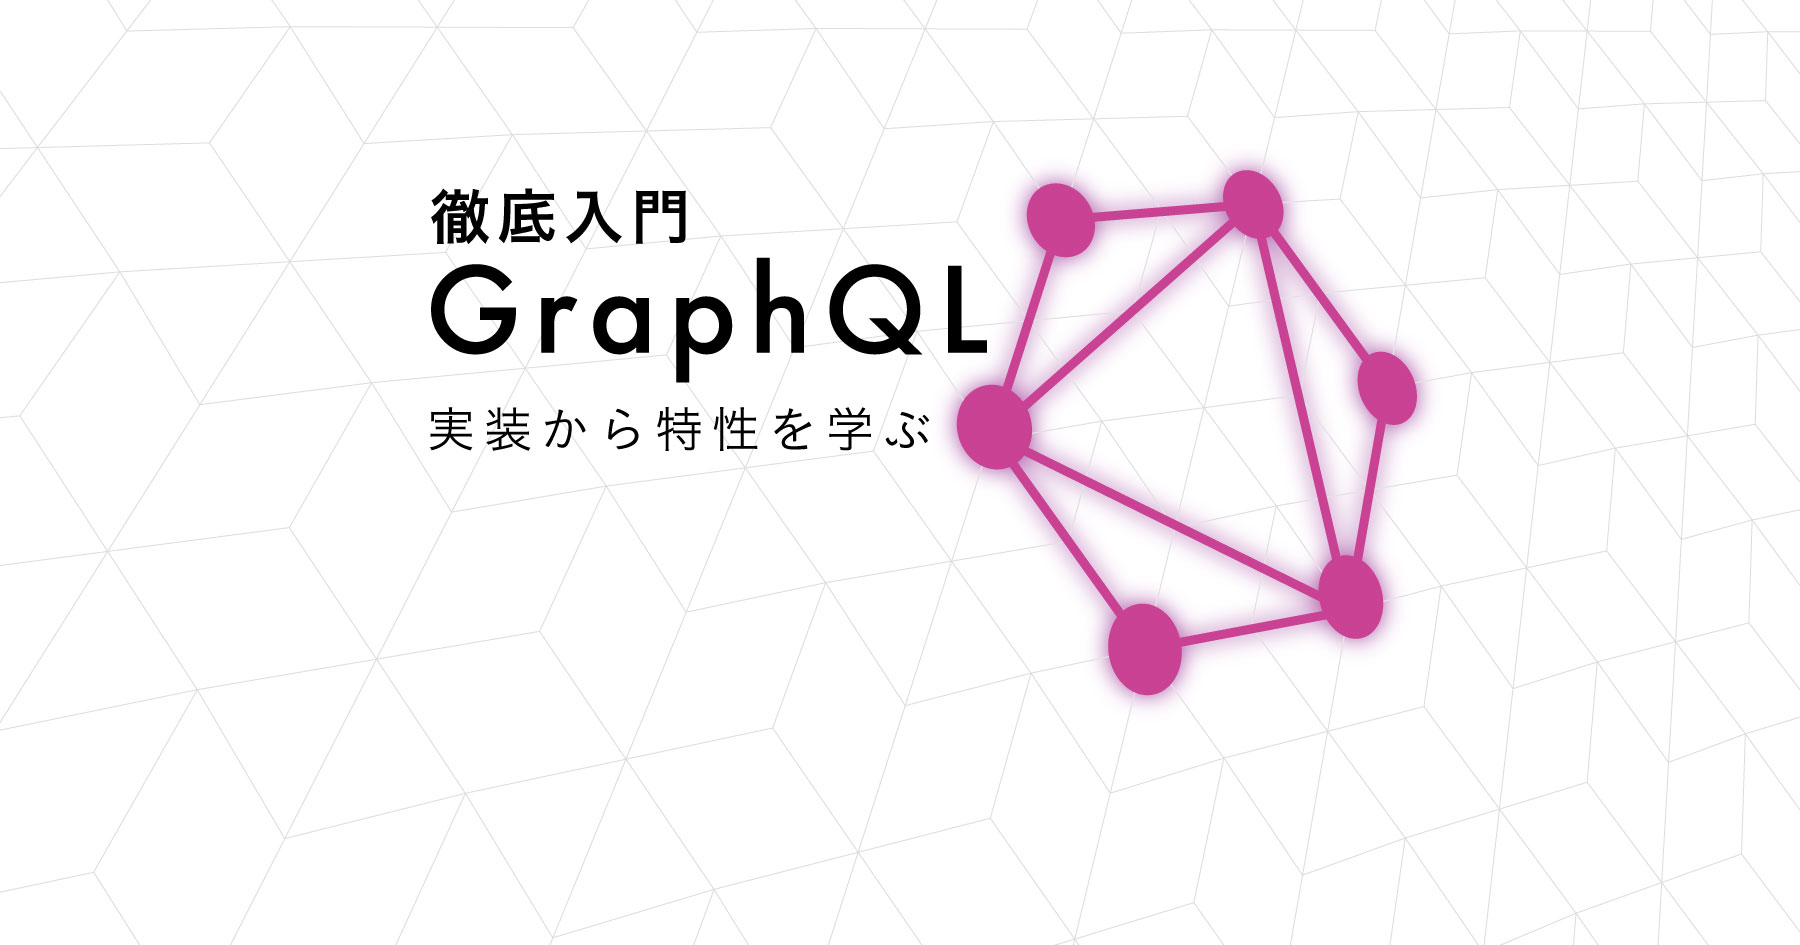 「GraphQL」徹底入門 ─ RESTとの比較、API・フロント双方の実装から学ぶ